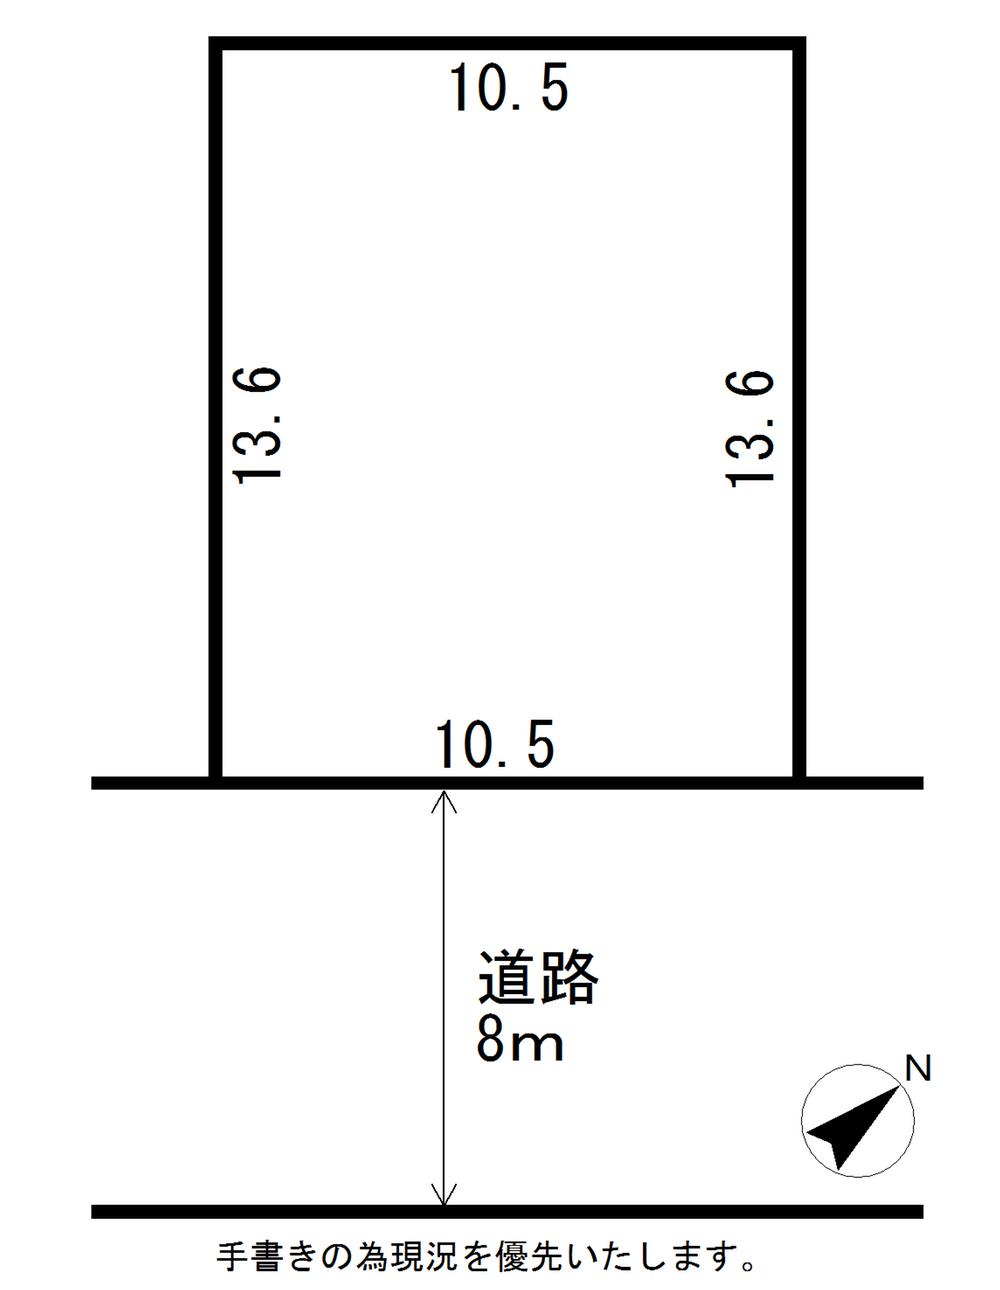 Compartment figure. Land price 6.98 million yen, Land area 142.8 sq m